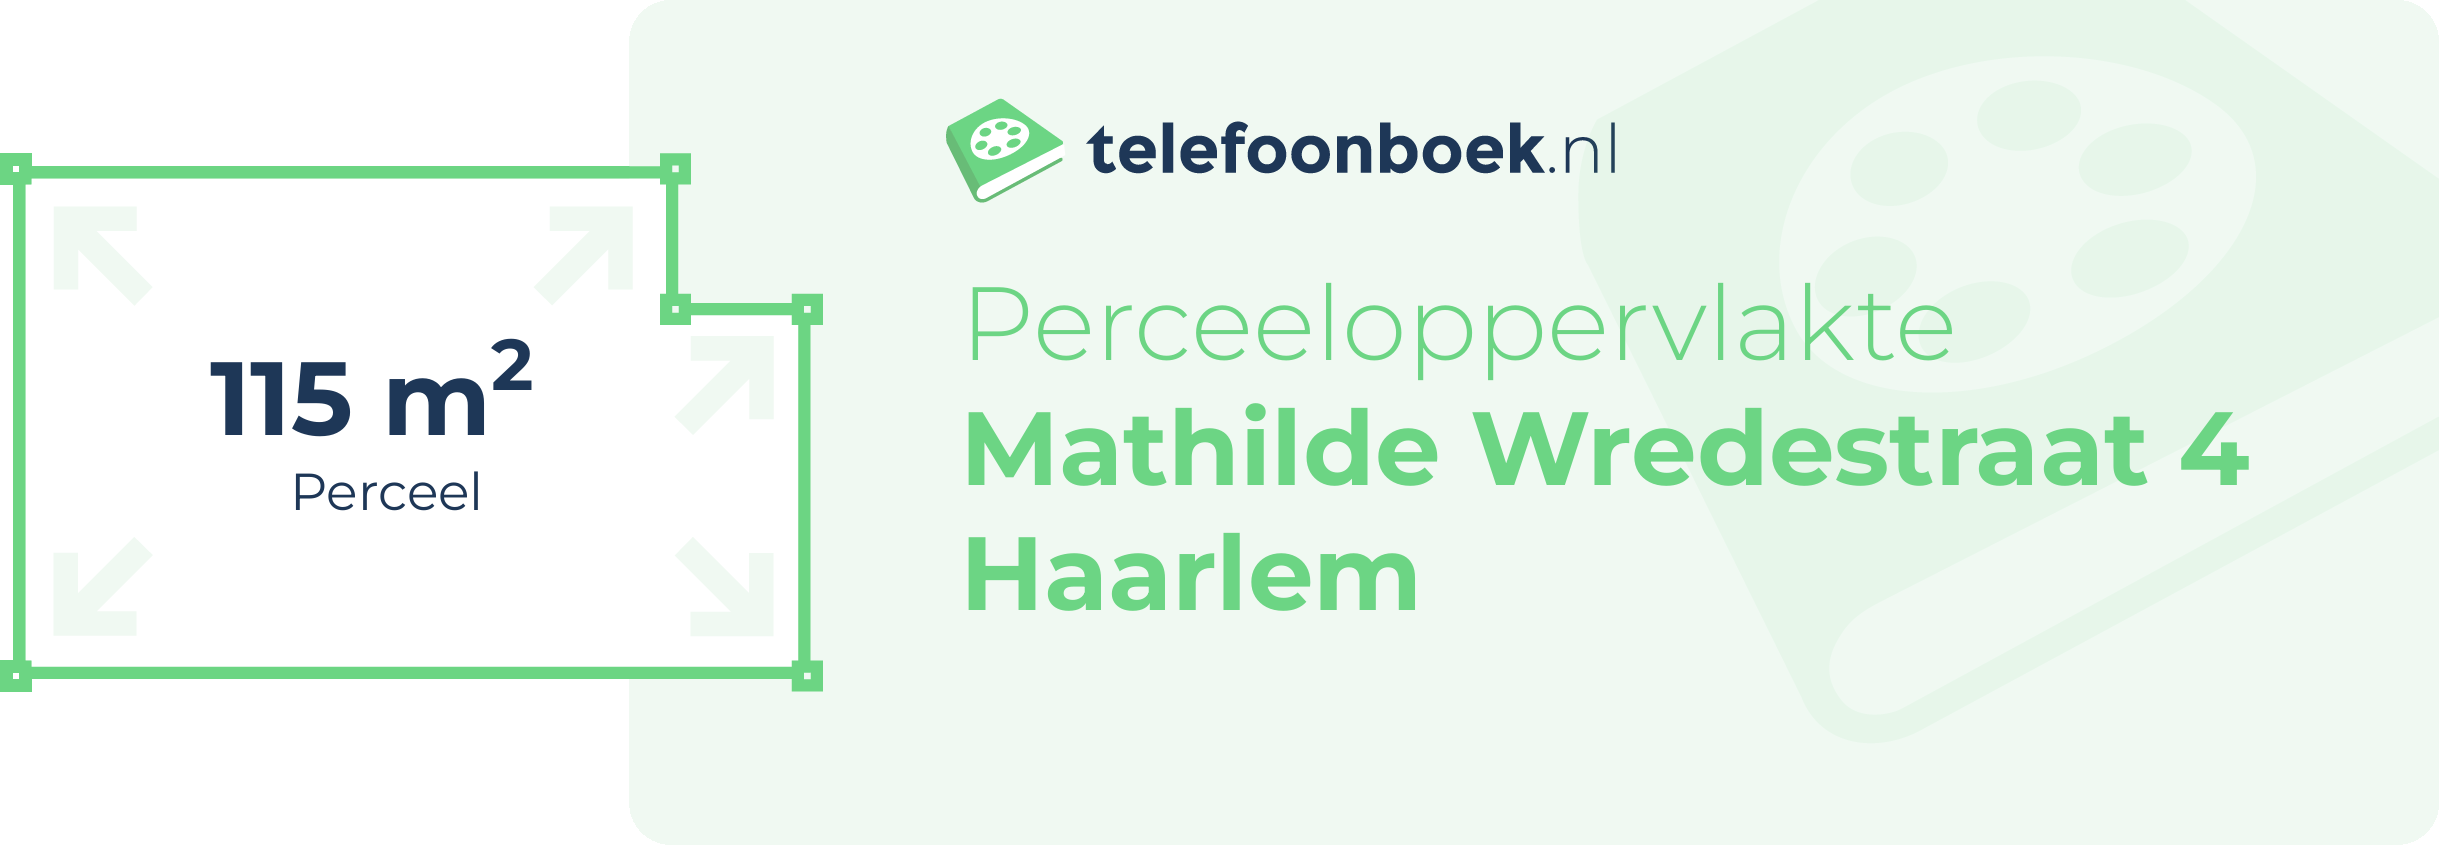 Perceeloppervlakte Mathilde Wredestraat 4 Haarlem